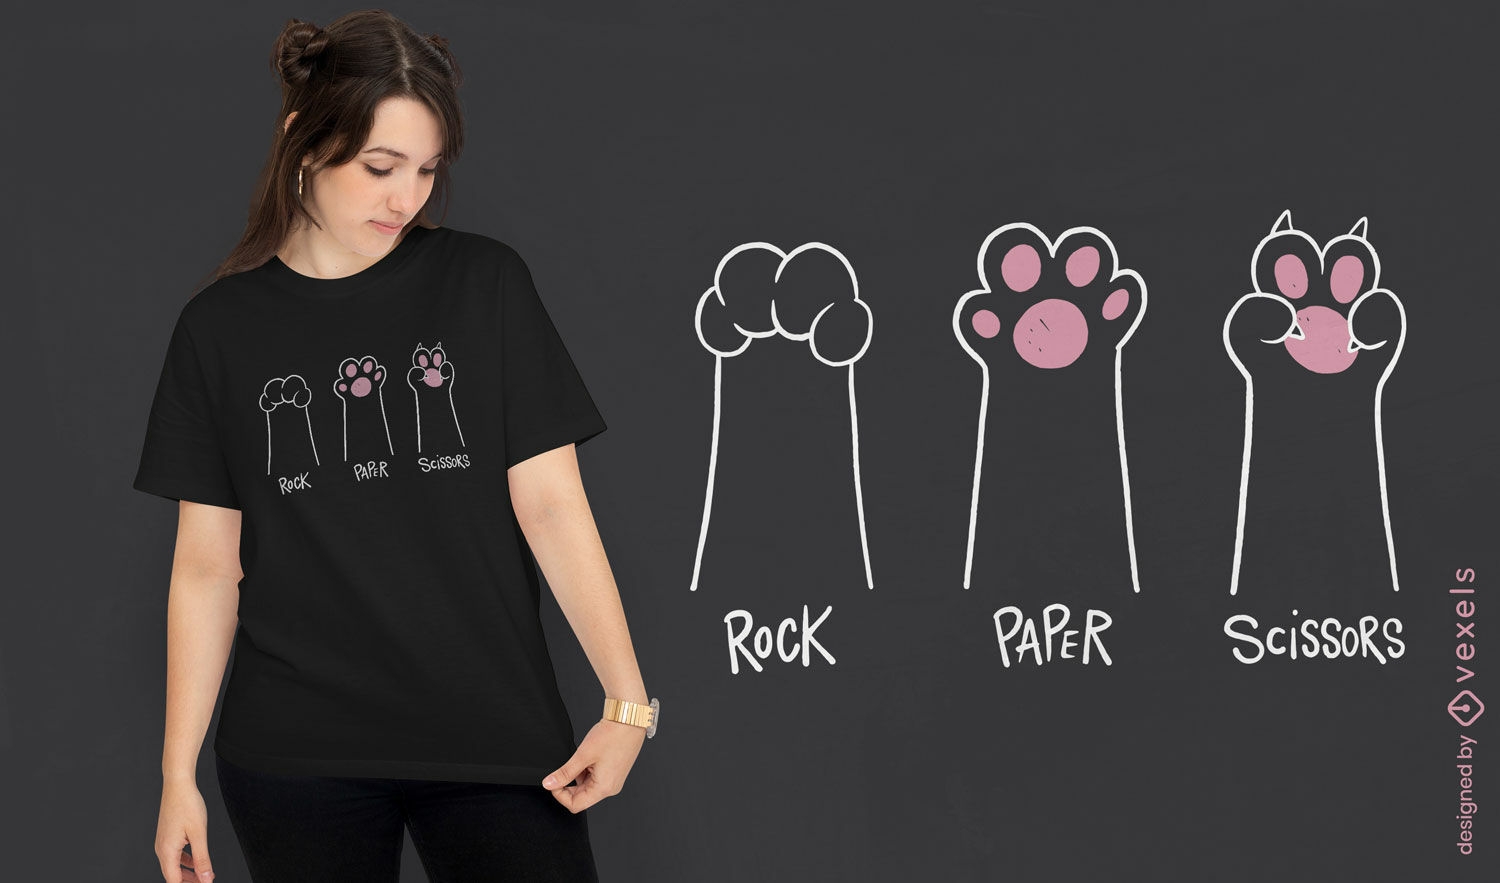 Design minimalista de camiseta para gato pedra-papel-tesoura